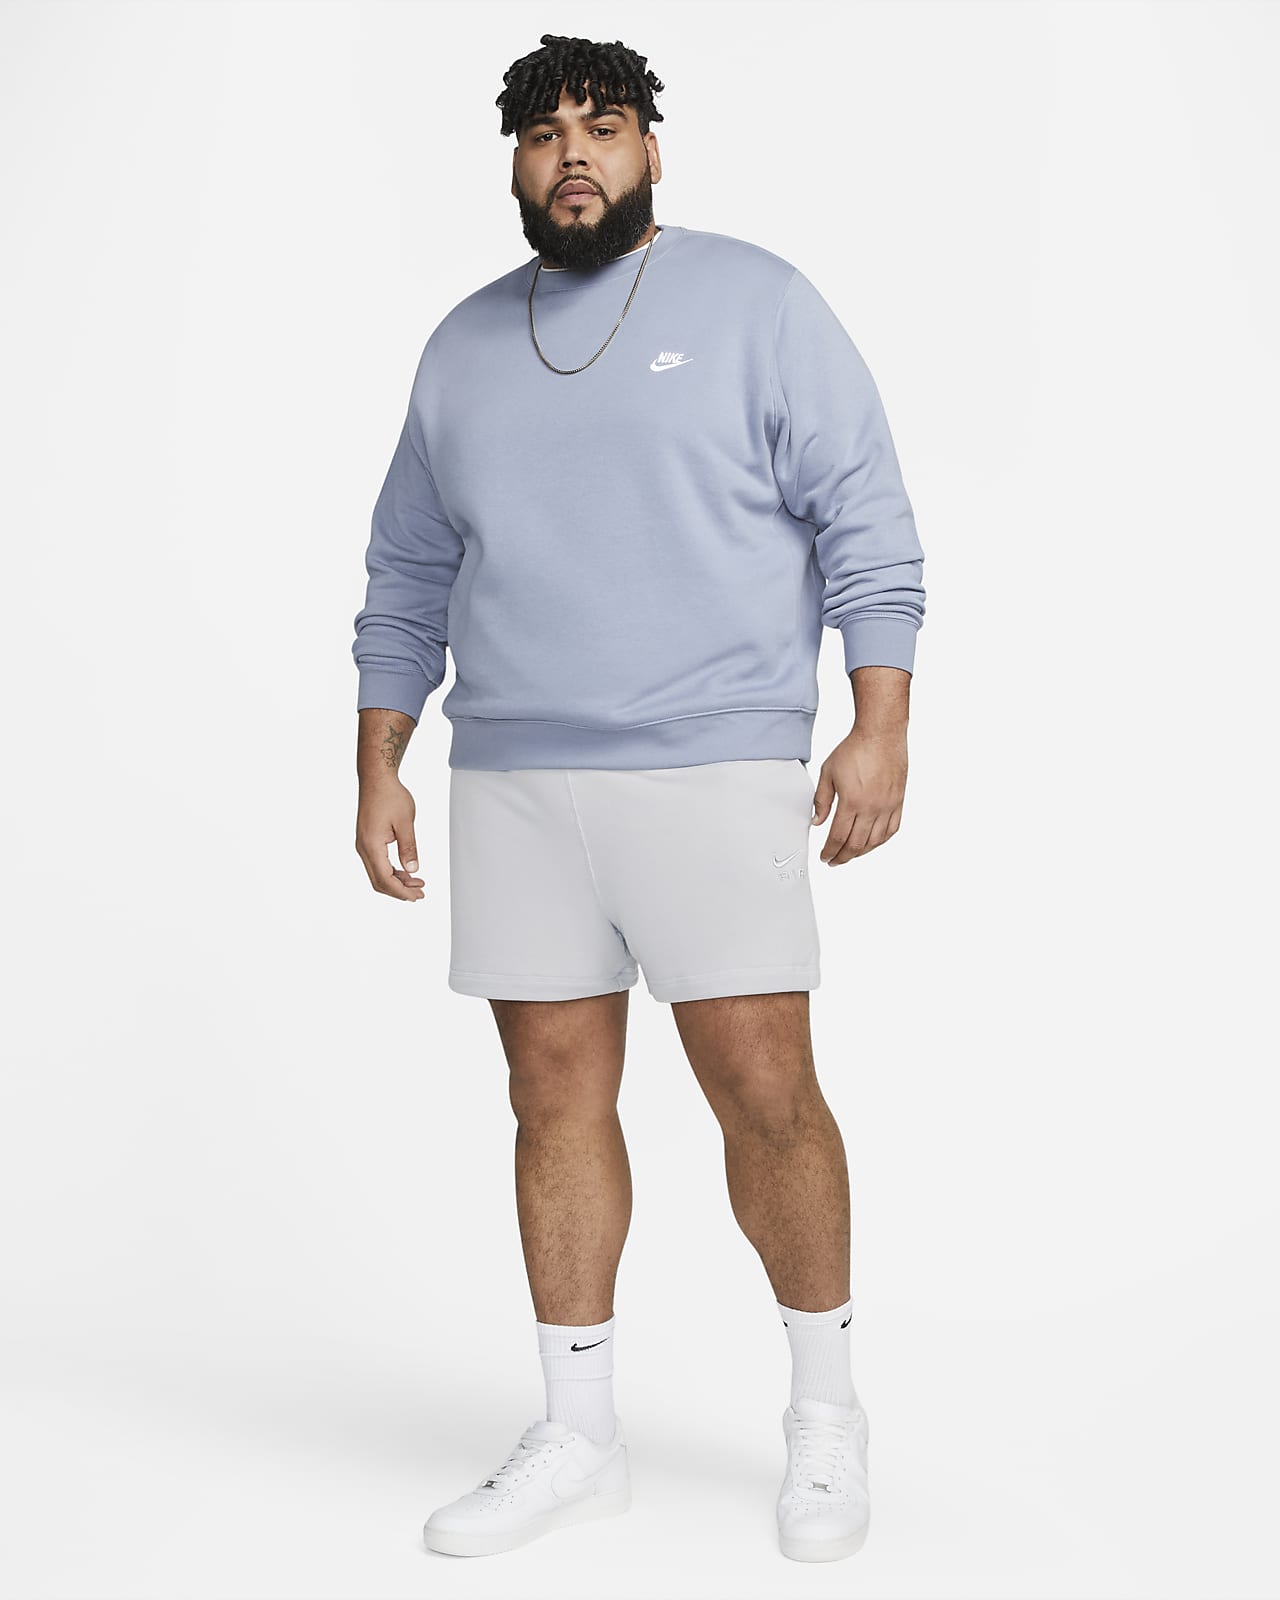 Nike Sportswear Air Terry Men\'s Shorts. French